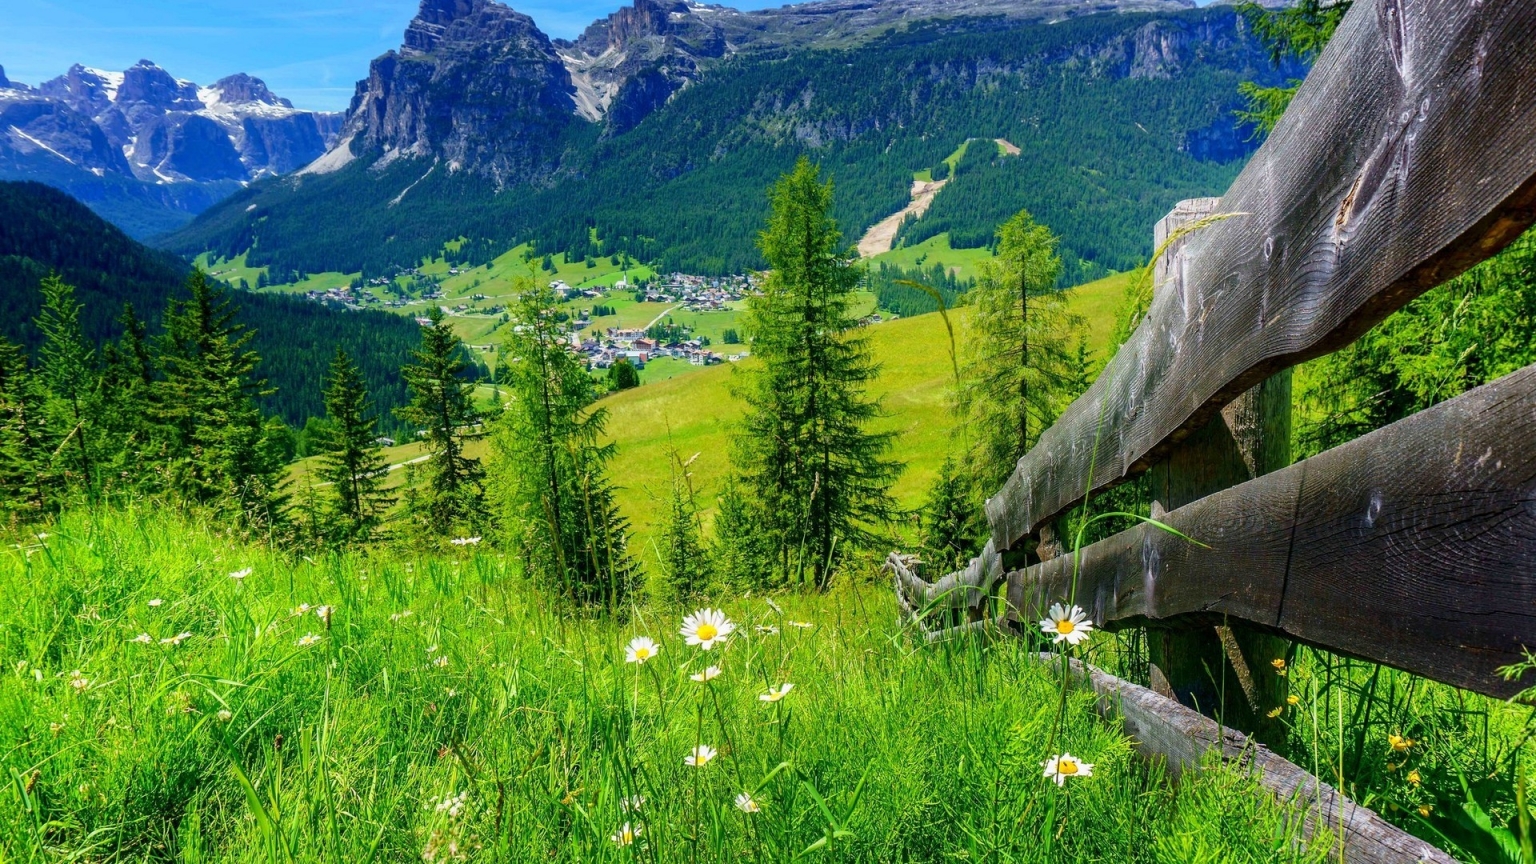 Spring Mountain Landscape for 1536 x 864 HDTV resolution